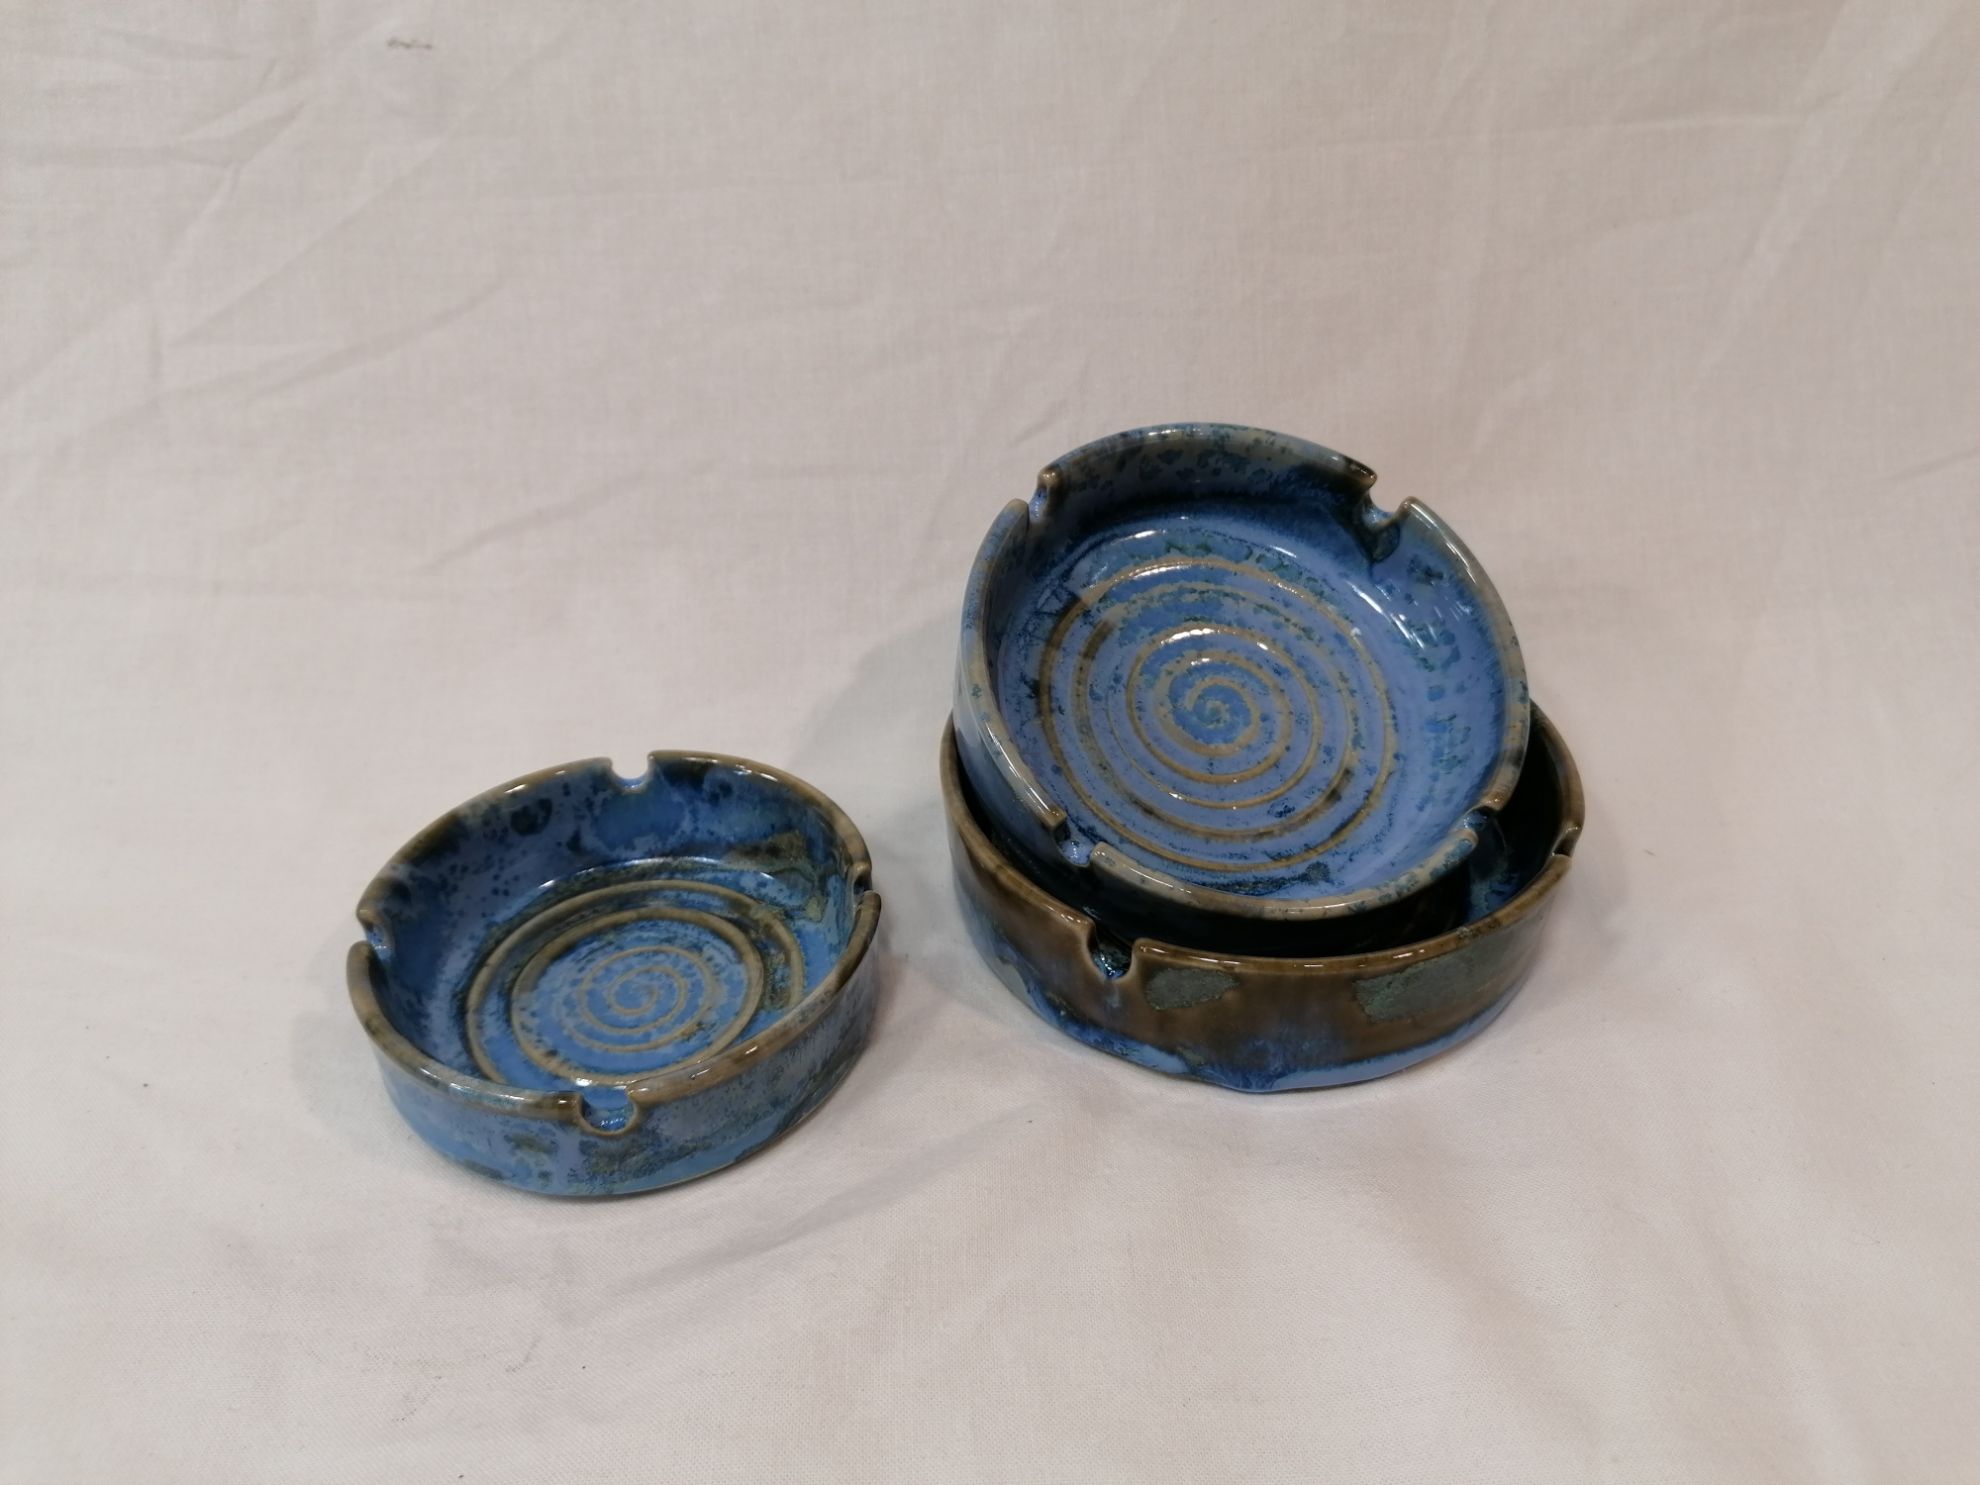 Ceramic ashtray - Bogdankeramik - unique handcrafted pottery